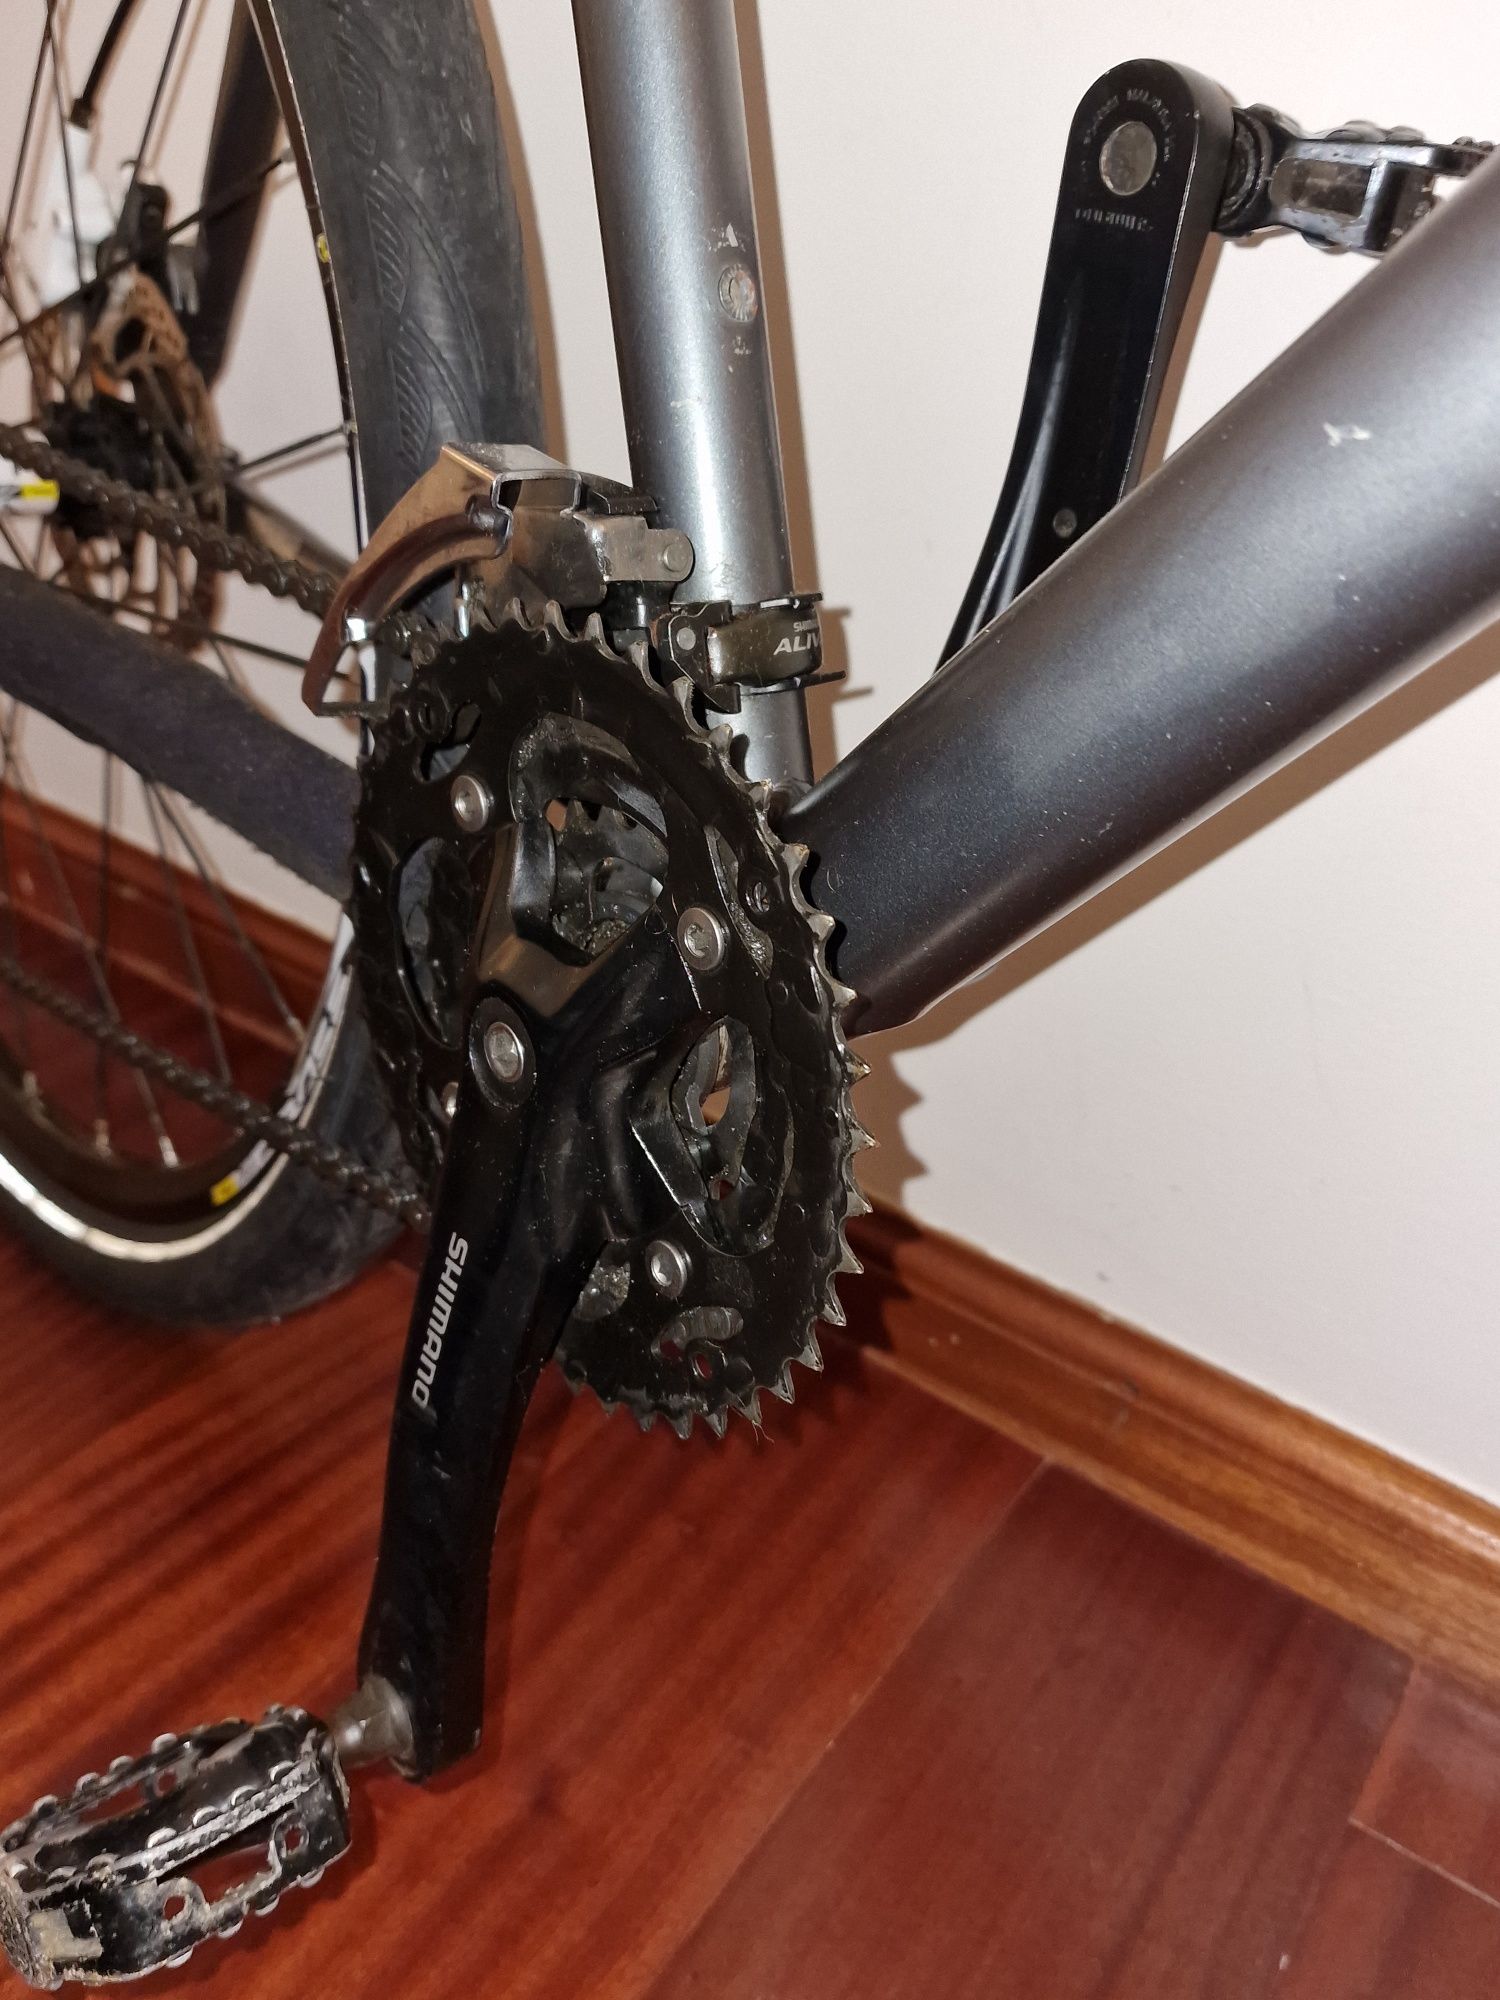 Bicicleta btt roda 26